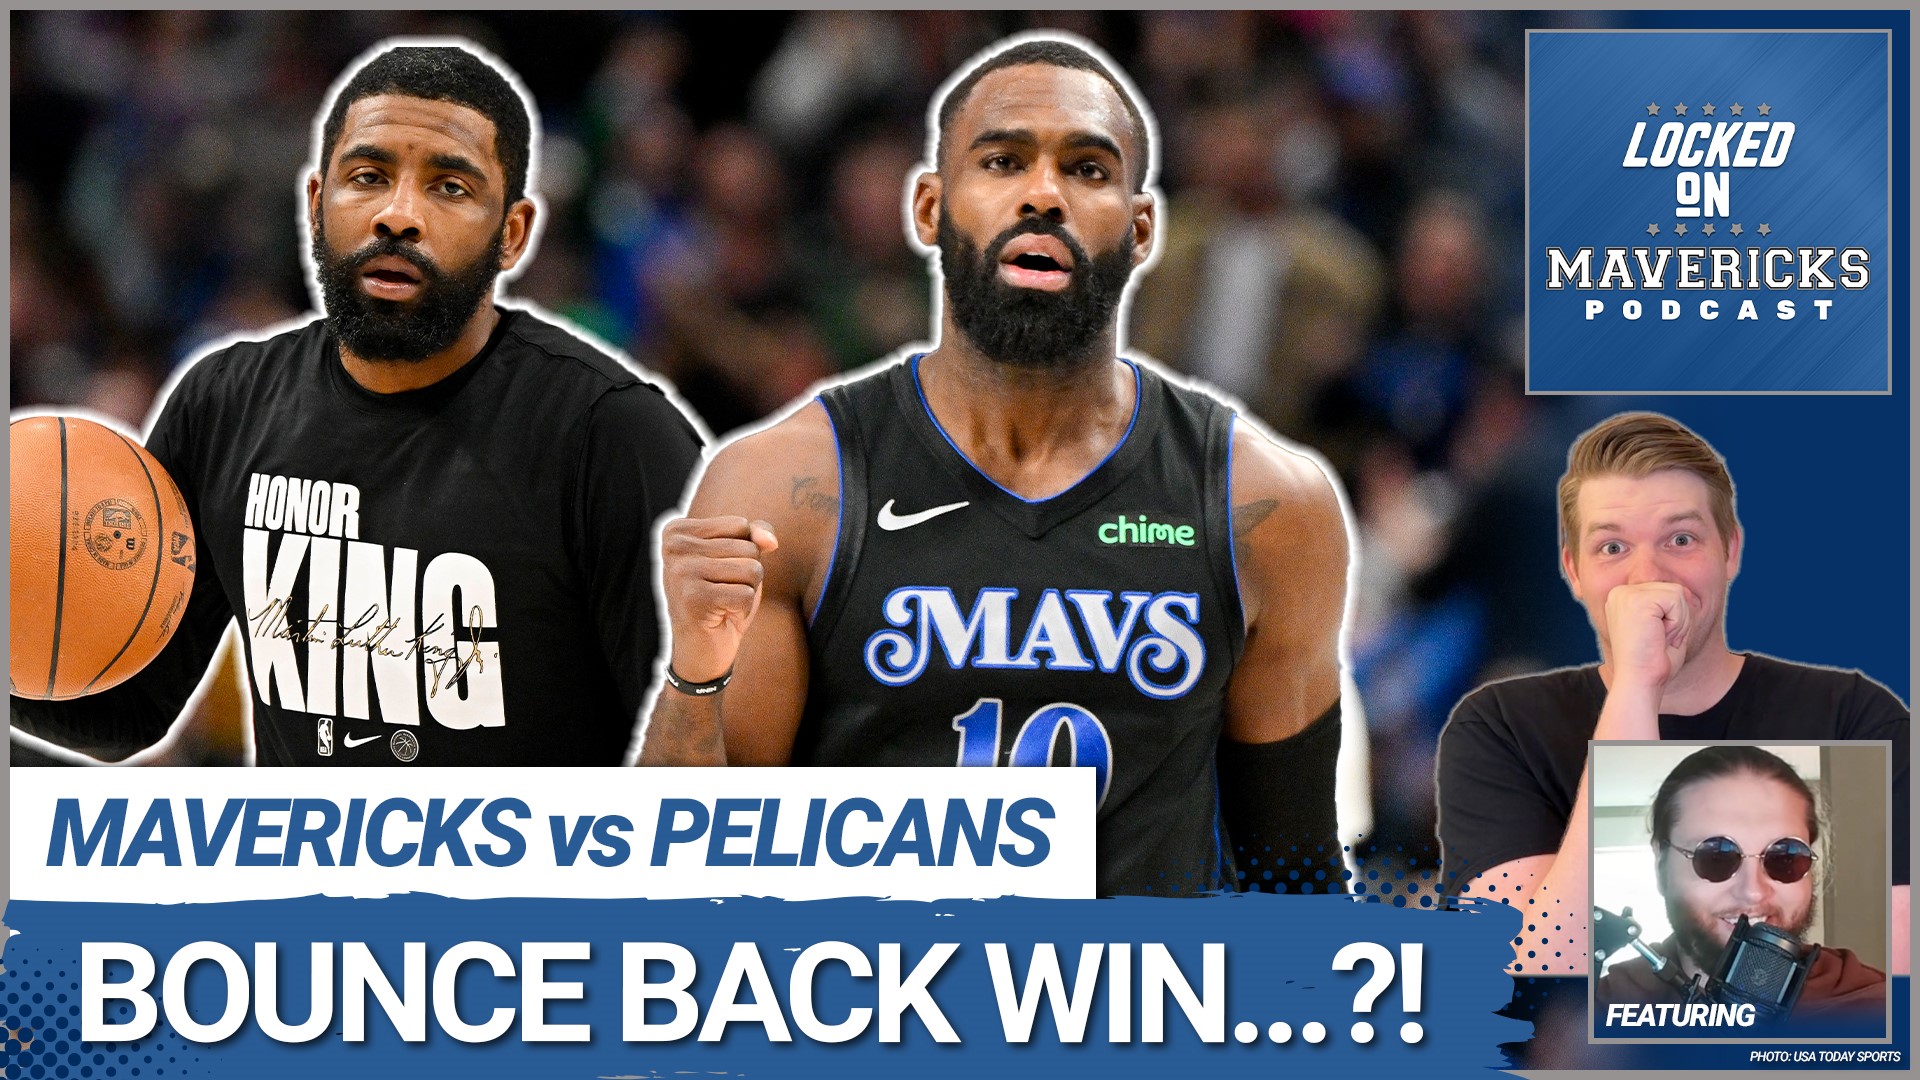 Nick Angstadt & Slightly Biased breakdown the Dallas Mavericks' bounce-back win against the New Orleans Pelicans behind Kyrie Irving & Tim Hardaway Jr.